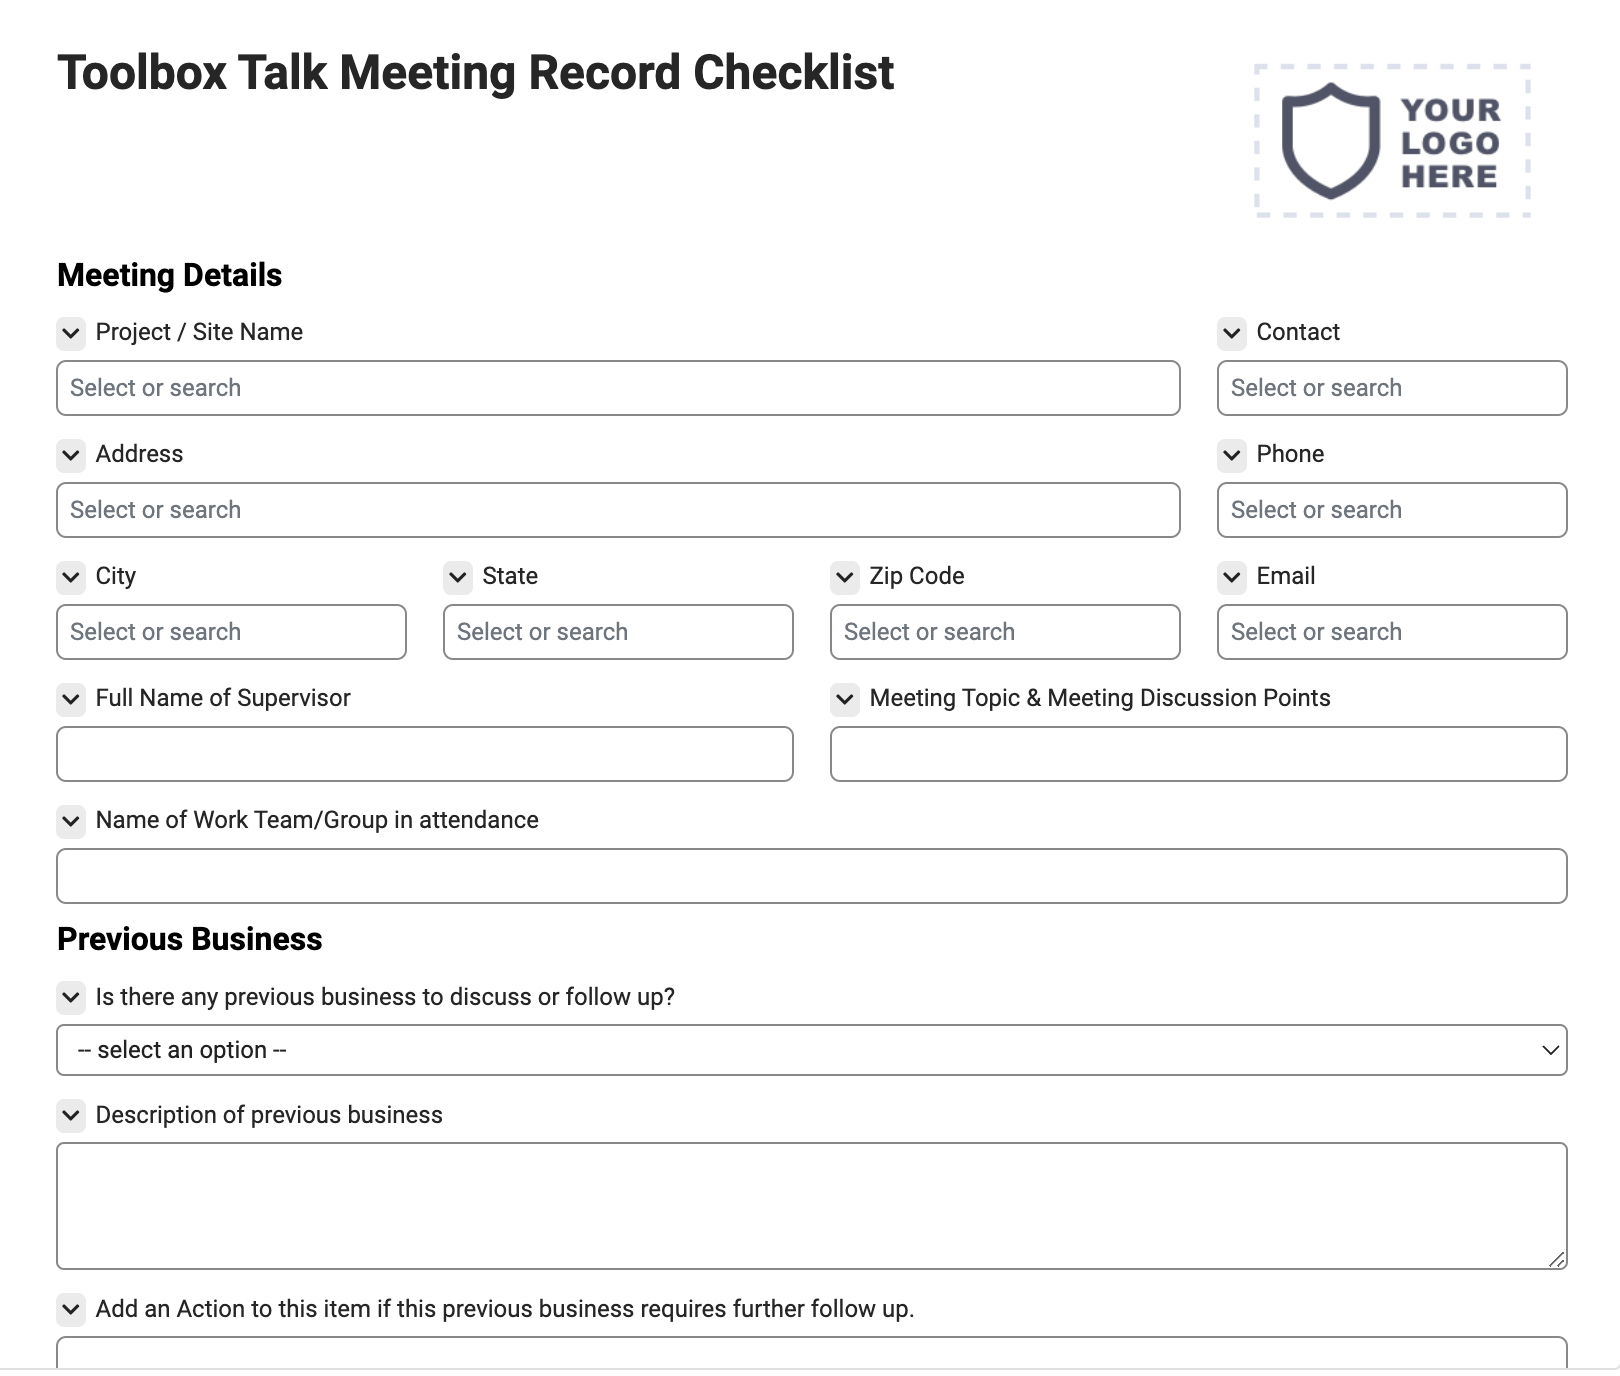 Toolbox Talk Meeting Record Checklist